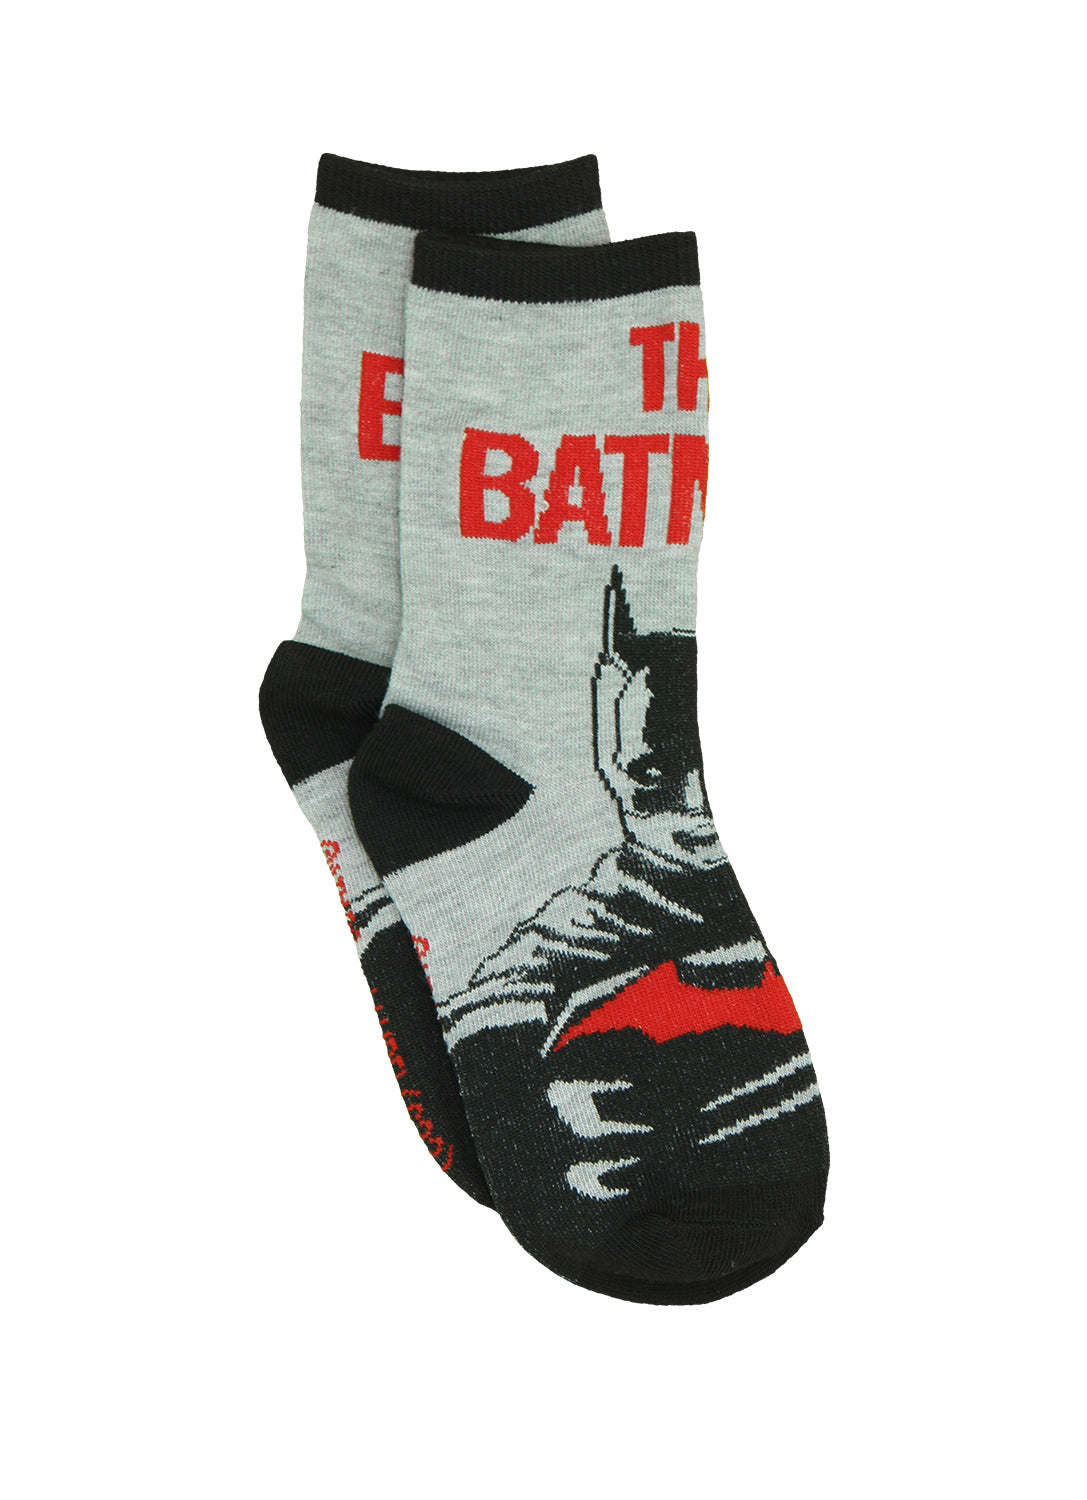 Boys The Batman Socks - 6 Pack